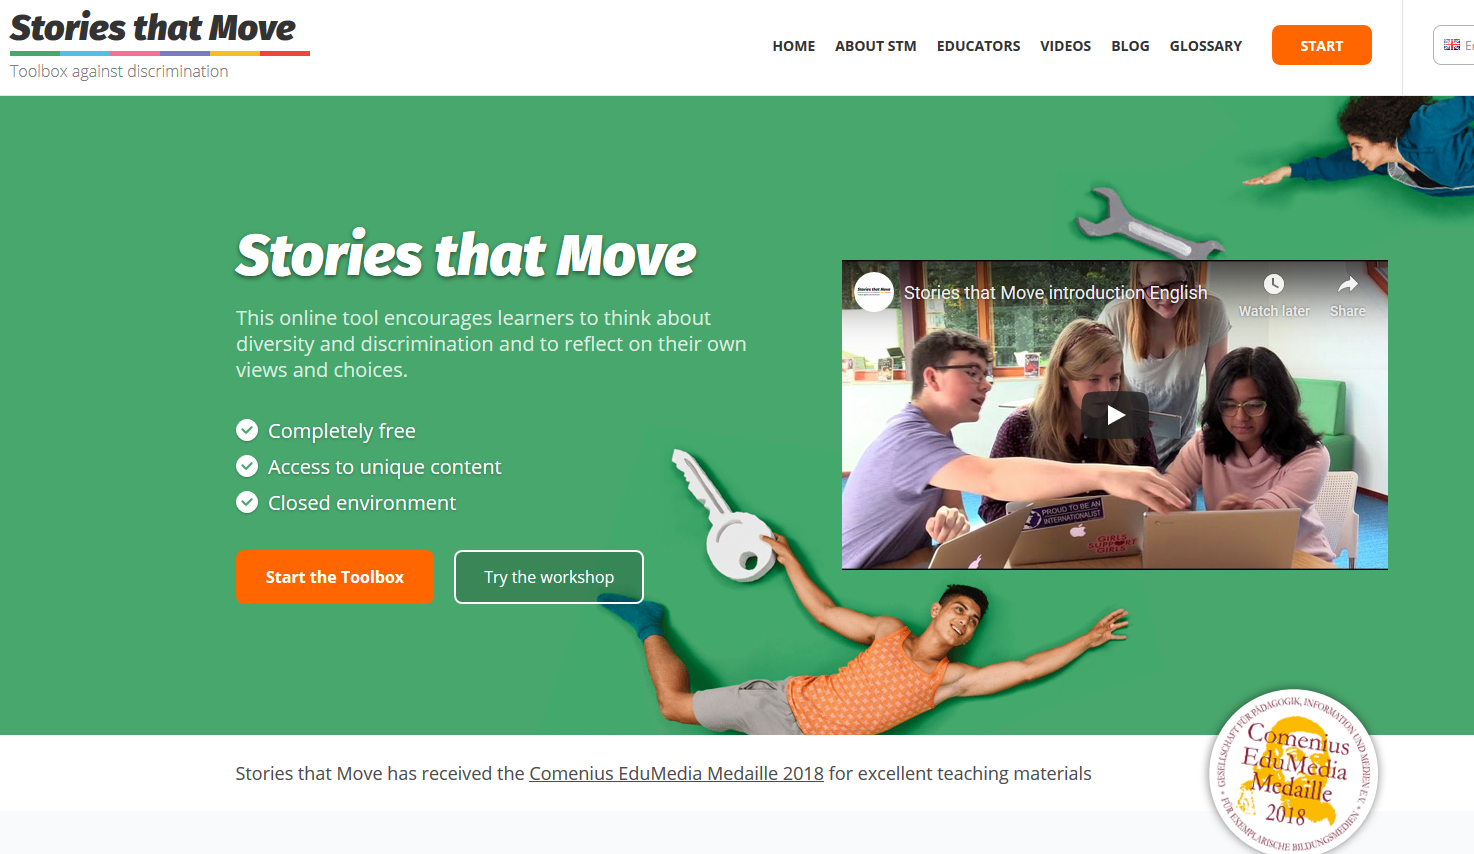 "Stories that Move" Startseite